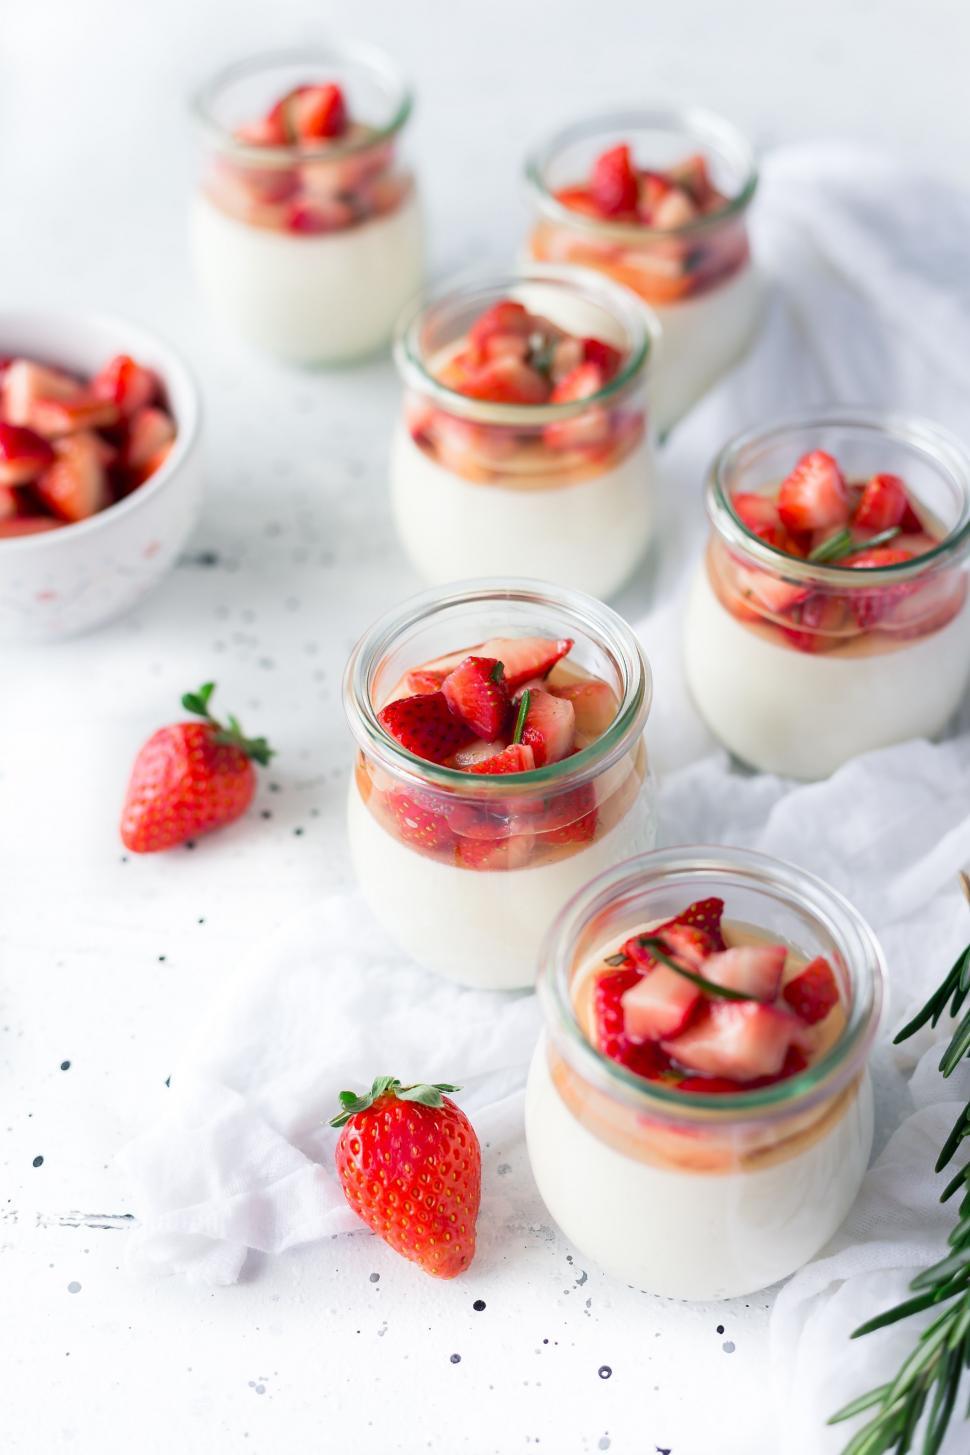 Free Image of Small Jars of Yogurt With Strawberries 